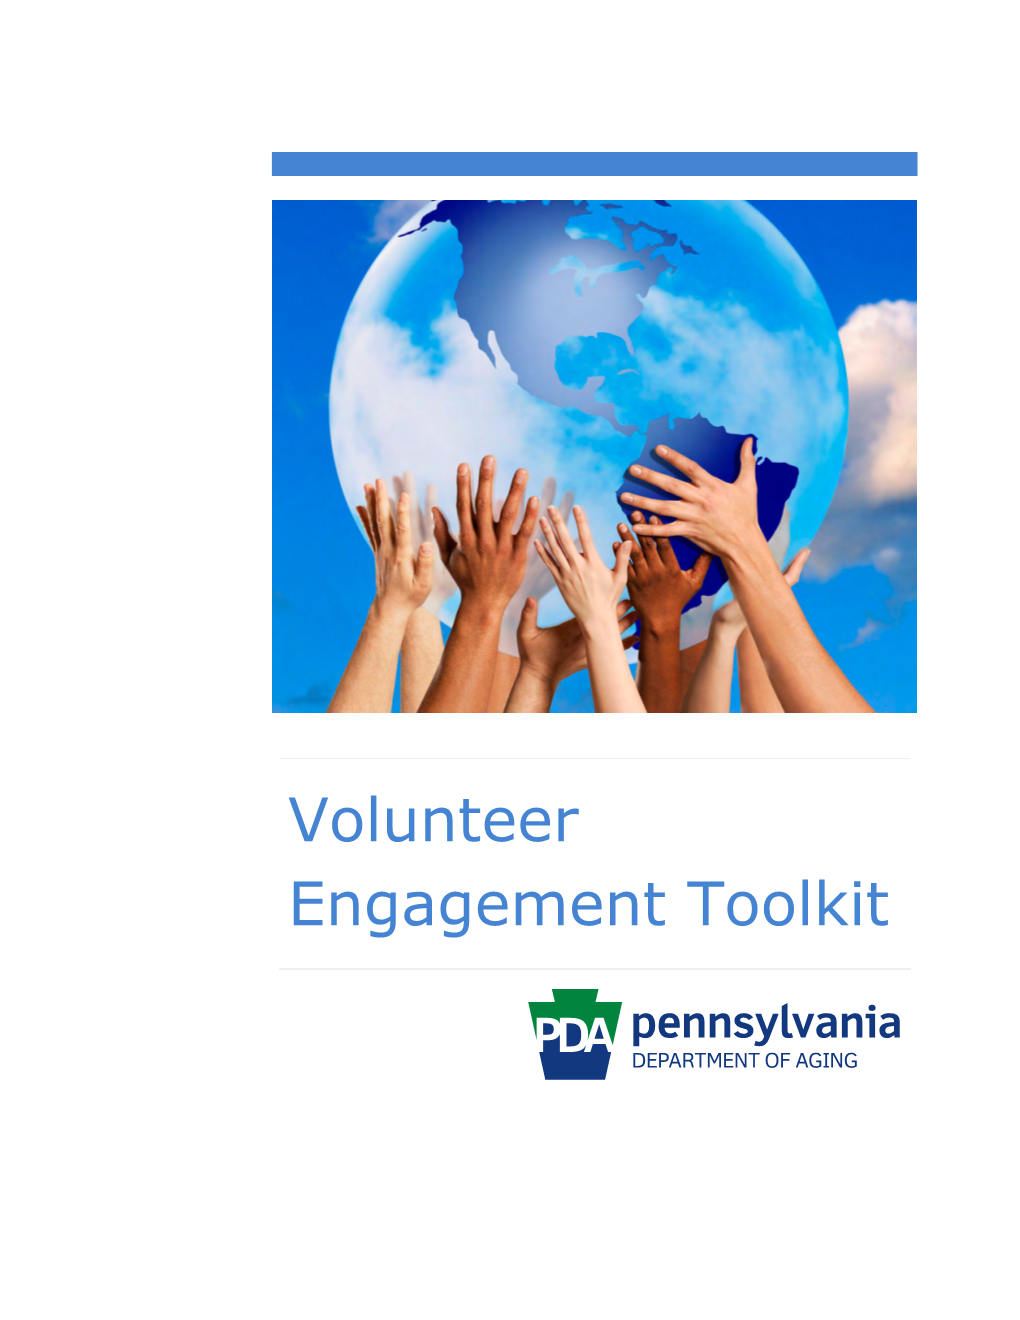 PDA Volunteer Engagement Toolkit Guide FINAL Jul 22